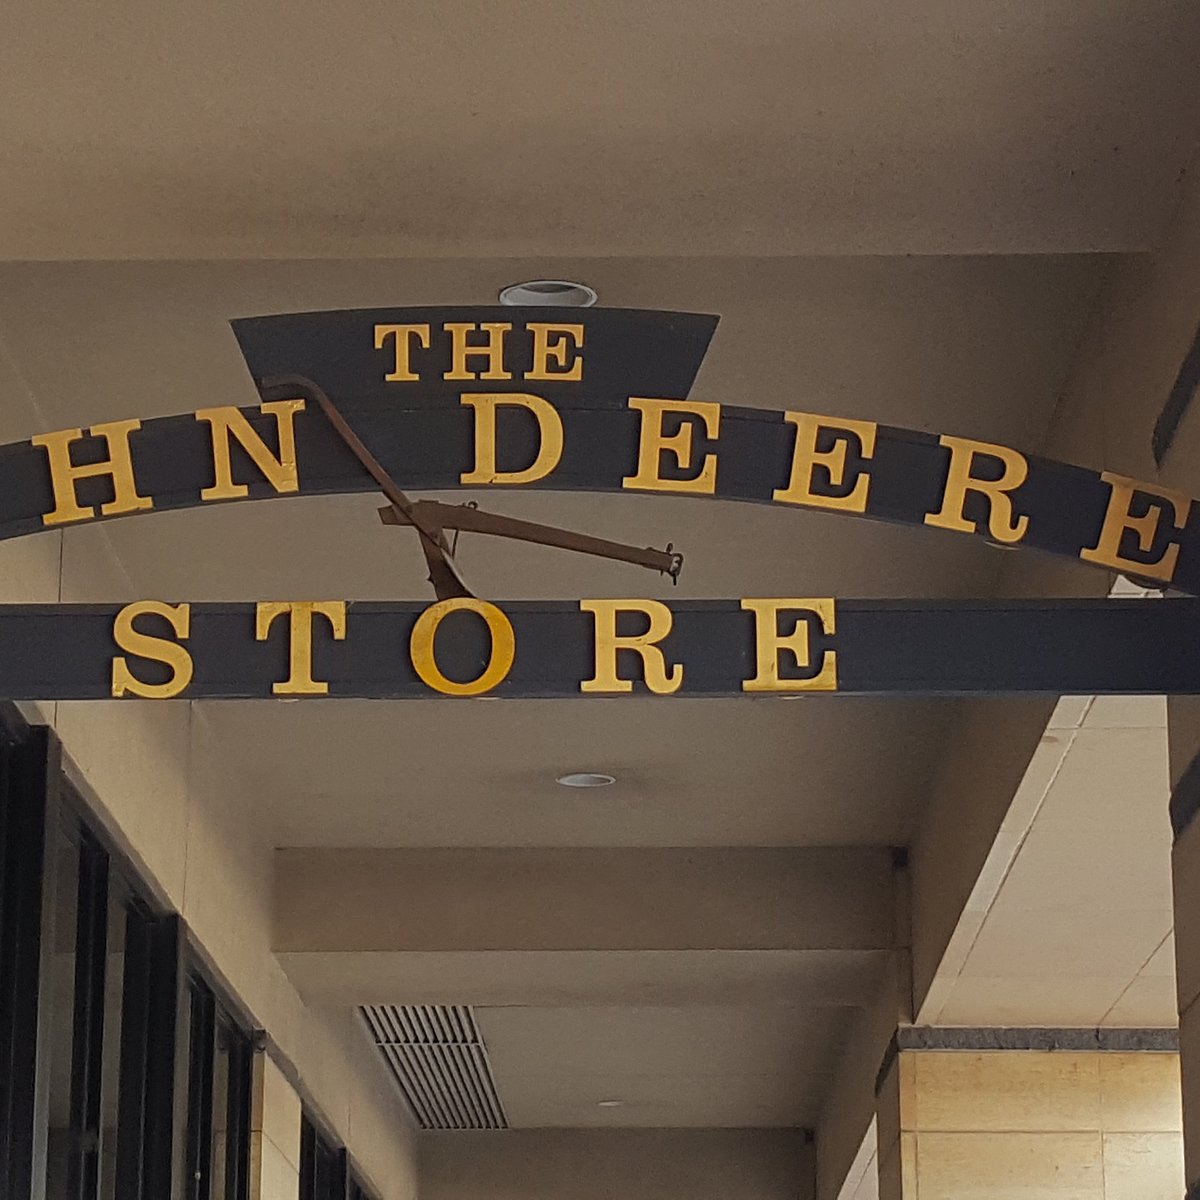 John Deere - The perfect gift doesn't exi. JohnDeereStore.com